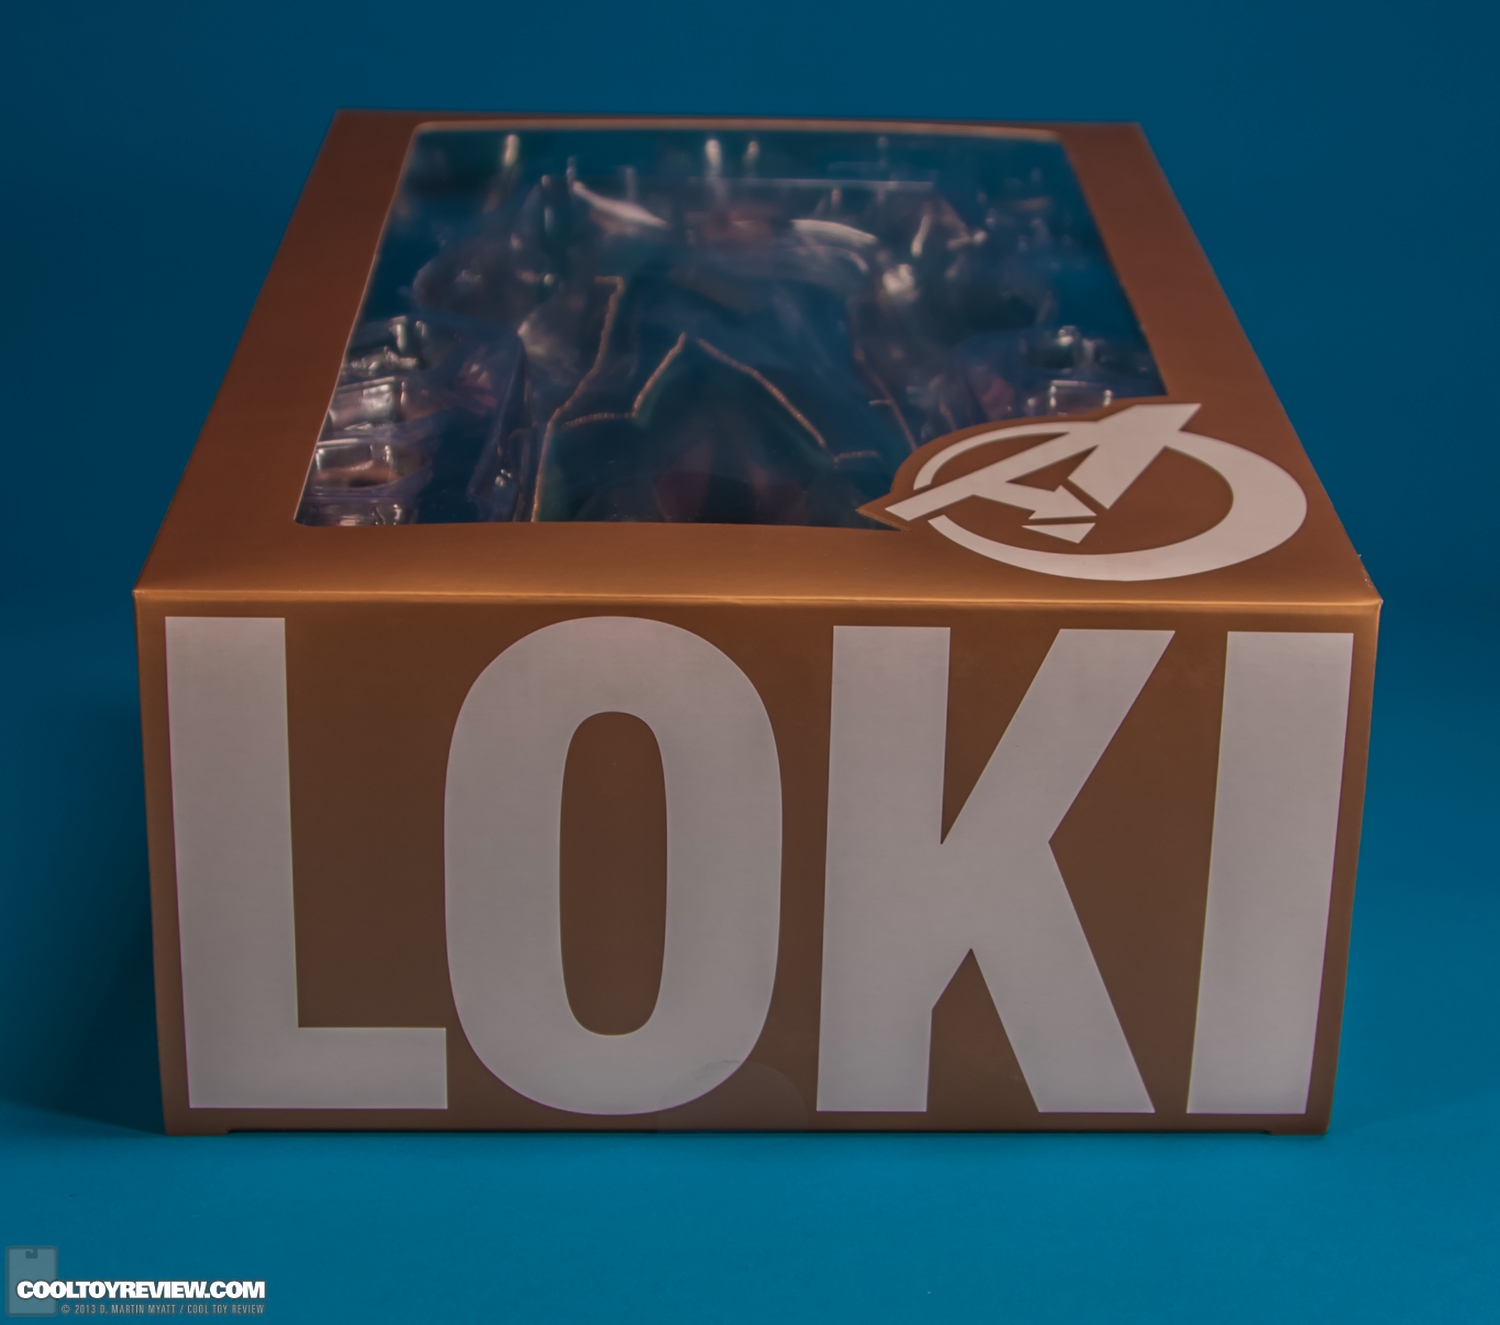 Loki-Avengers-Movie-Masterpiece-Series-Hot-Toys-039.jpg